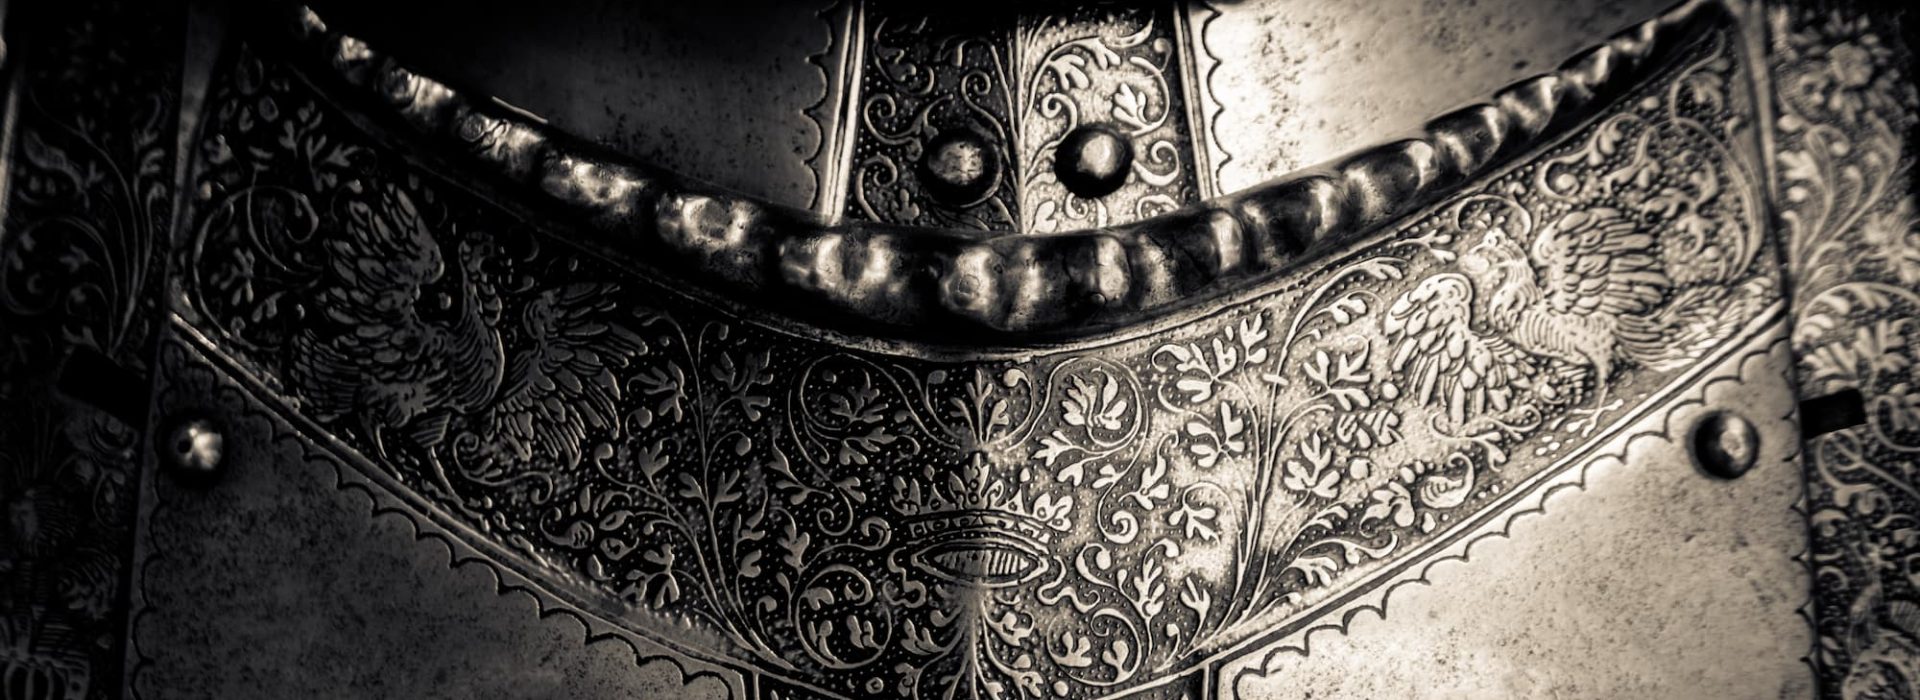 medieval-armor-detail-2023-11-27-05-08-59-utc-2